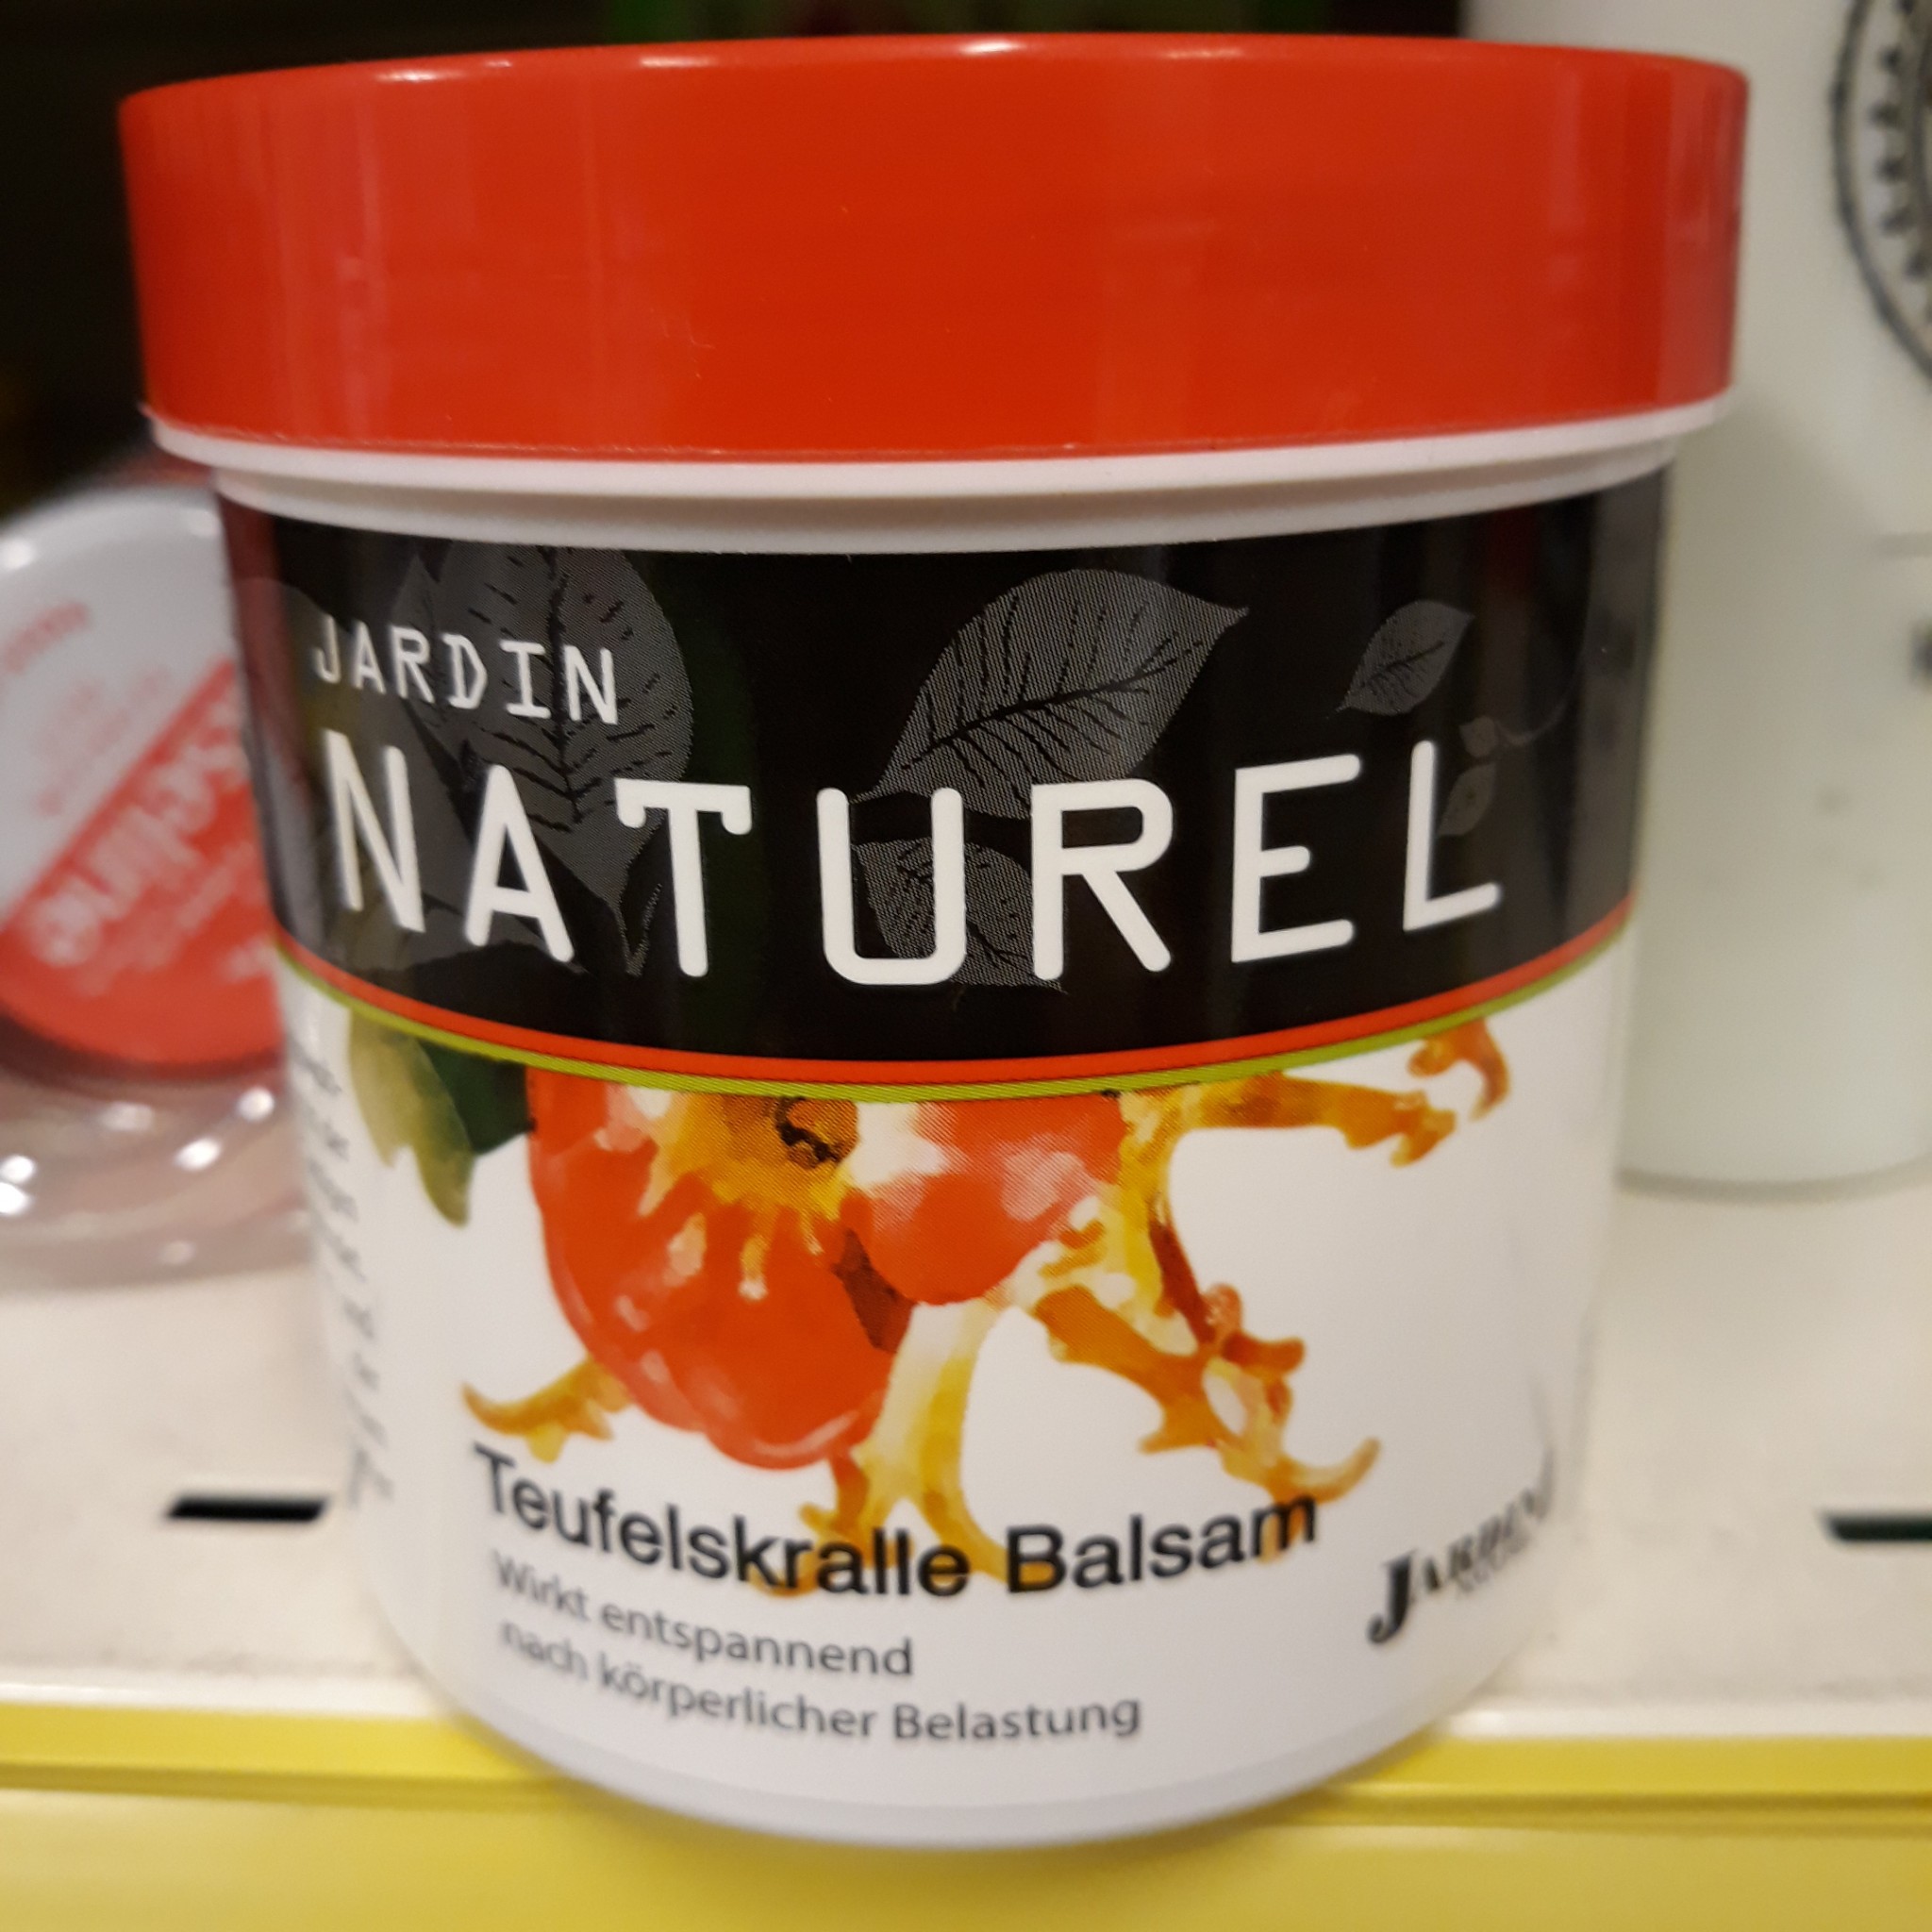 Úrad verejného zdravotníctva upozorňuje na telový krém Teufelskralle Balsam značky Jardin Naturel od nemeckého výrobcu Crevil Cosmetics GmbH